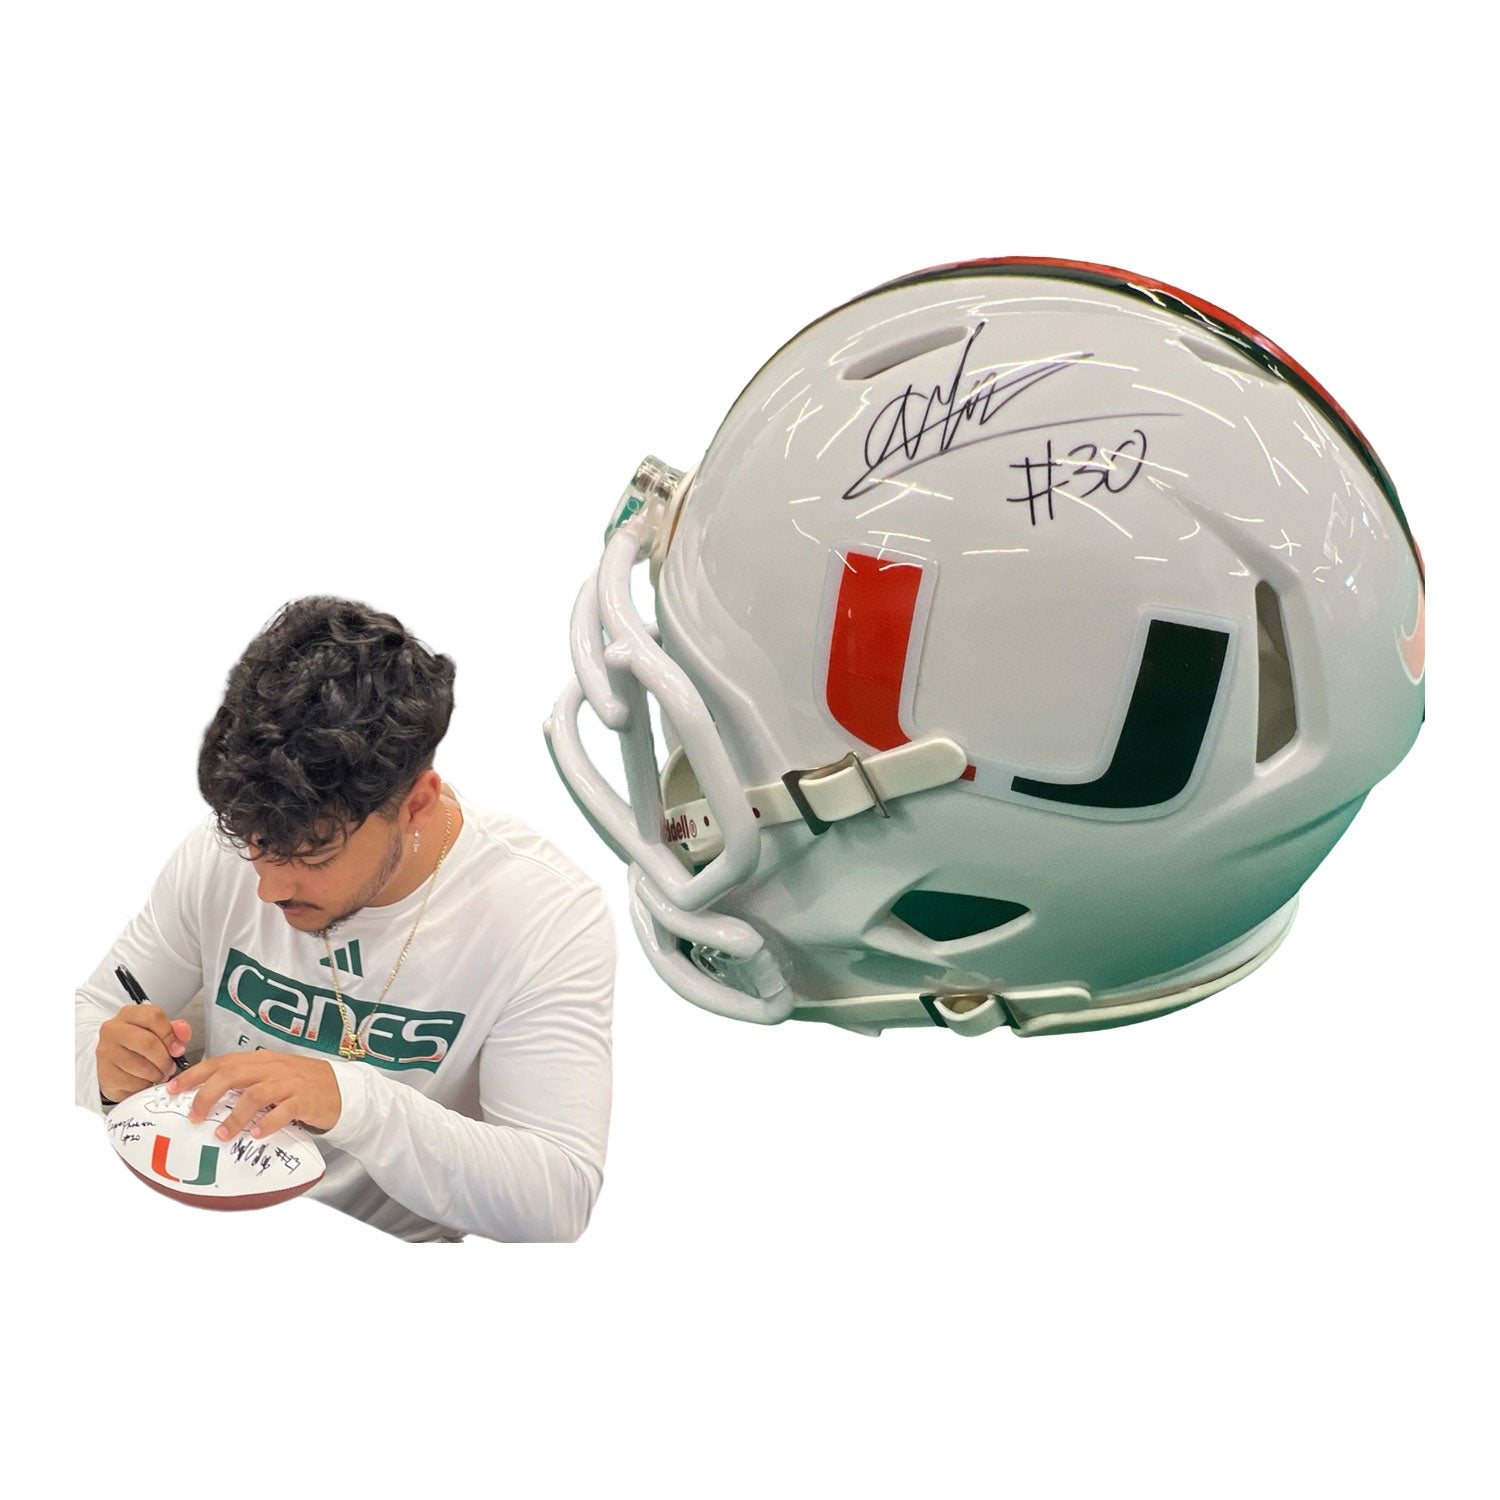 Miami Hurricanes Student Athlete #30 Andres Borregales Mini Football Helmet - Main View